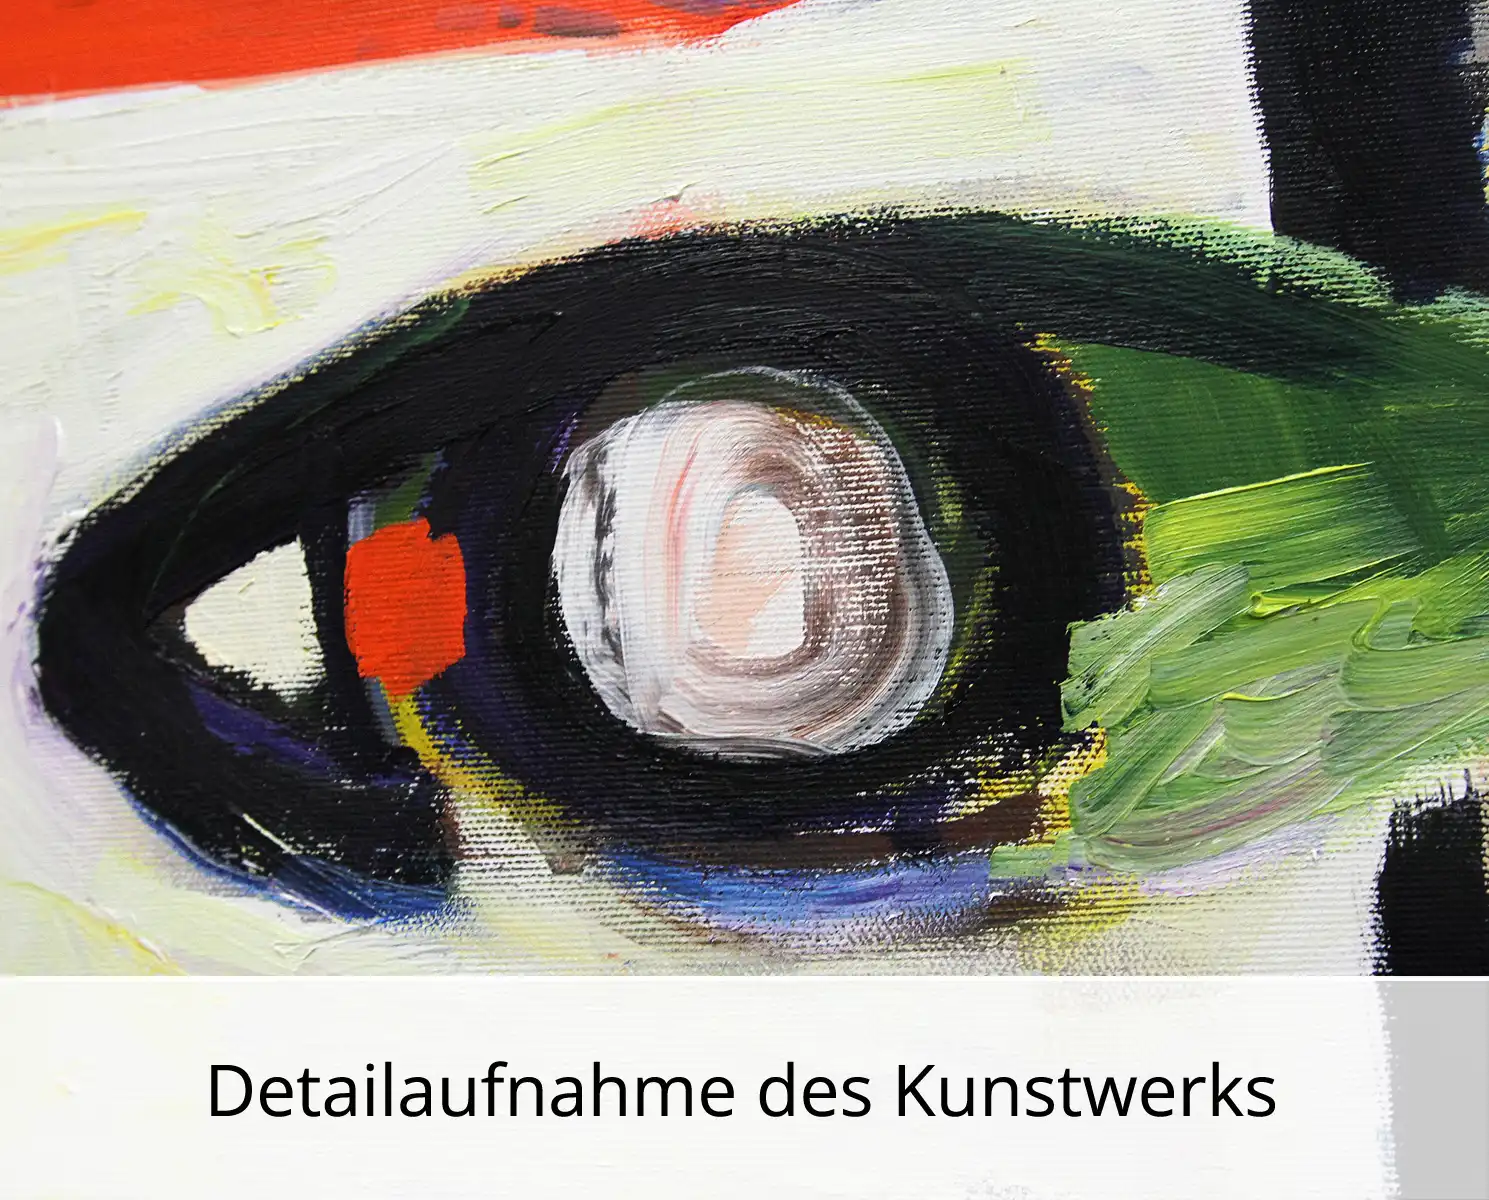 M. Cieśla: "Abstraktes Porträt / archetyp", Original/Unikat, Expressionistisches Ölgemälde